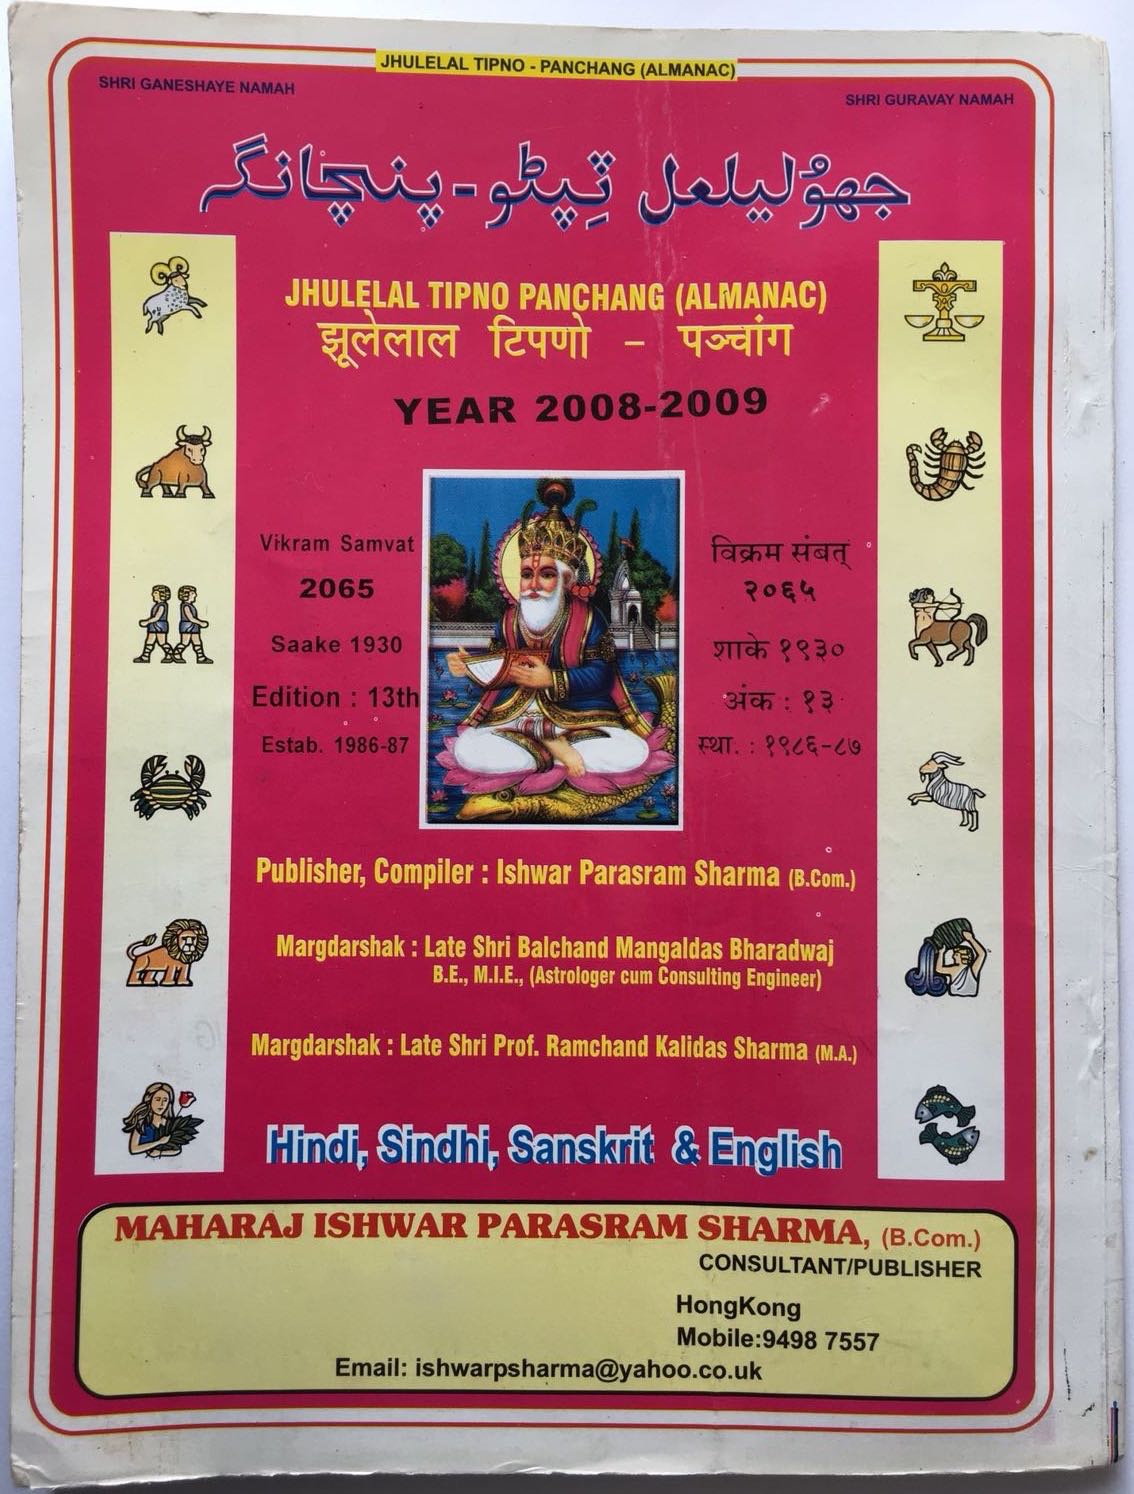 Jhulelal Tipno Panchang (Almanac) Year 2008-2009 compiled by Ishwar Parsram Sharma in Hindi, Sindhi, Sanskrit and English -Top cover page Sindhi side